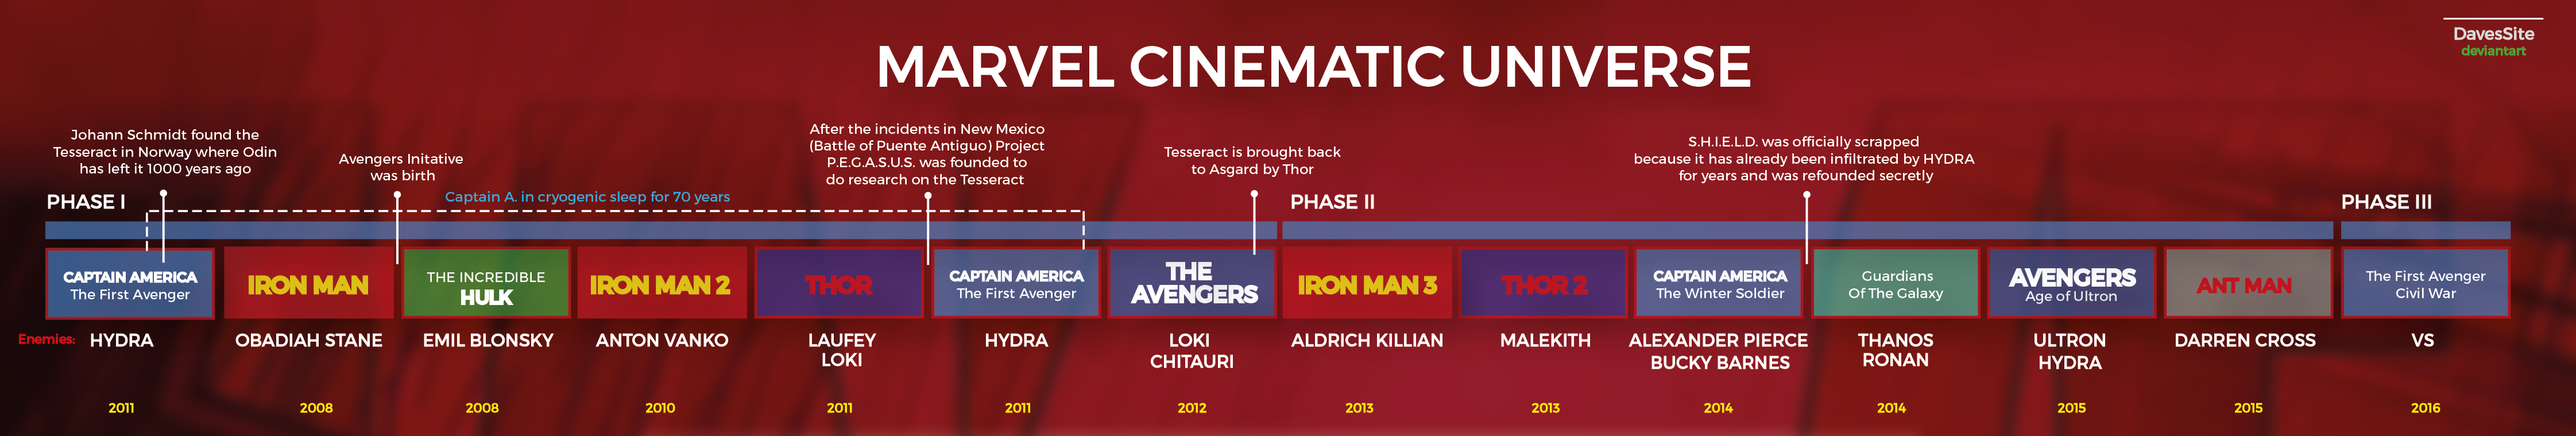 Marvel Cinematic Universe Timeline by DavesSite on DeviantArt